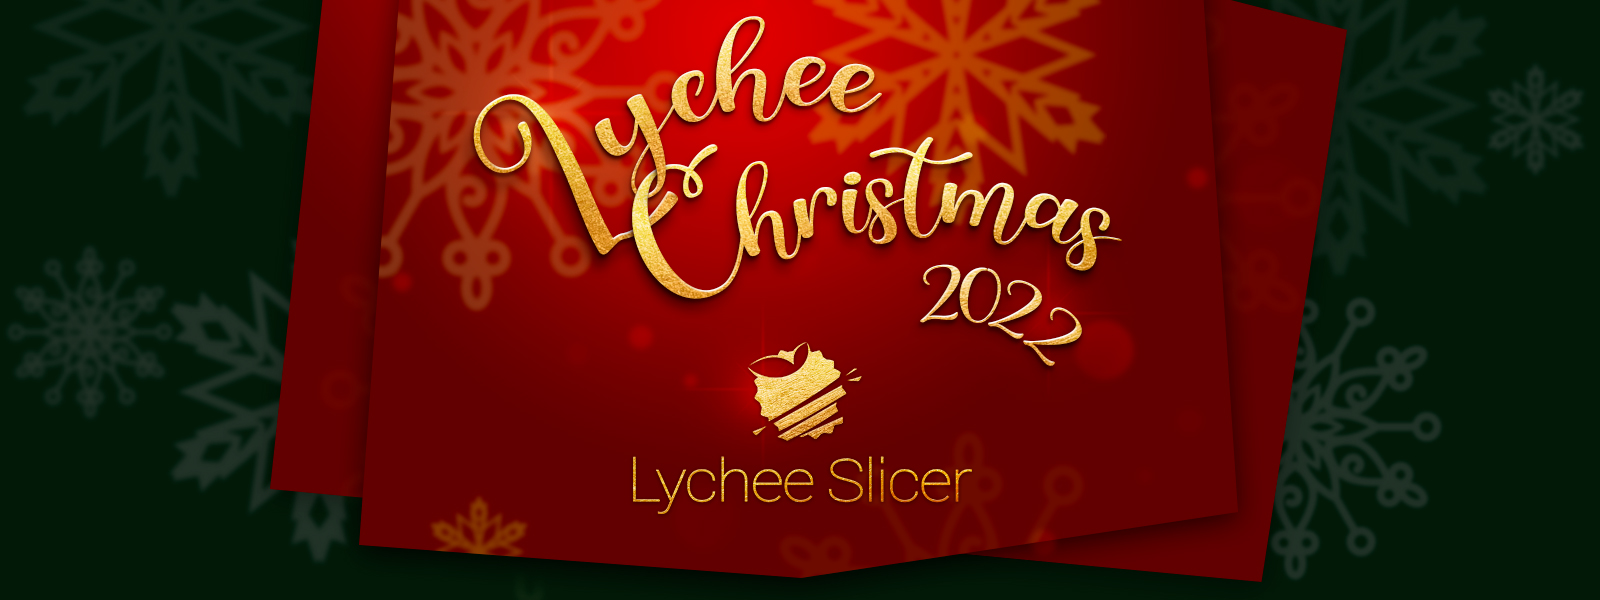 Lychee Slicer Christmas 2022